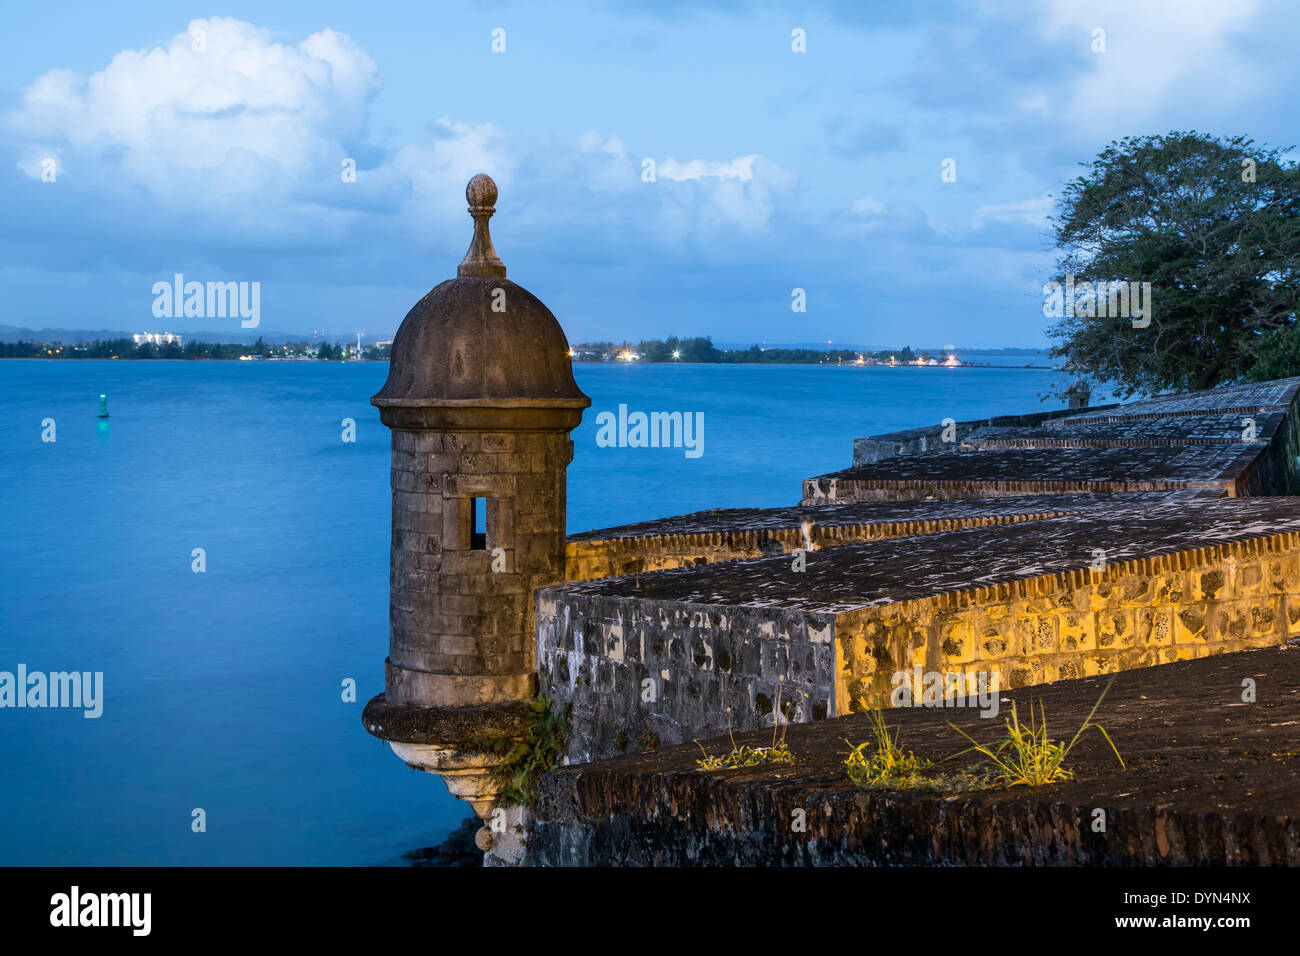 Sentry box (garita), San Juan National Historic Site, Old San Juan, Puerto Rico Stock Photo